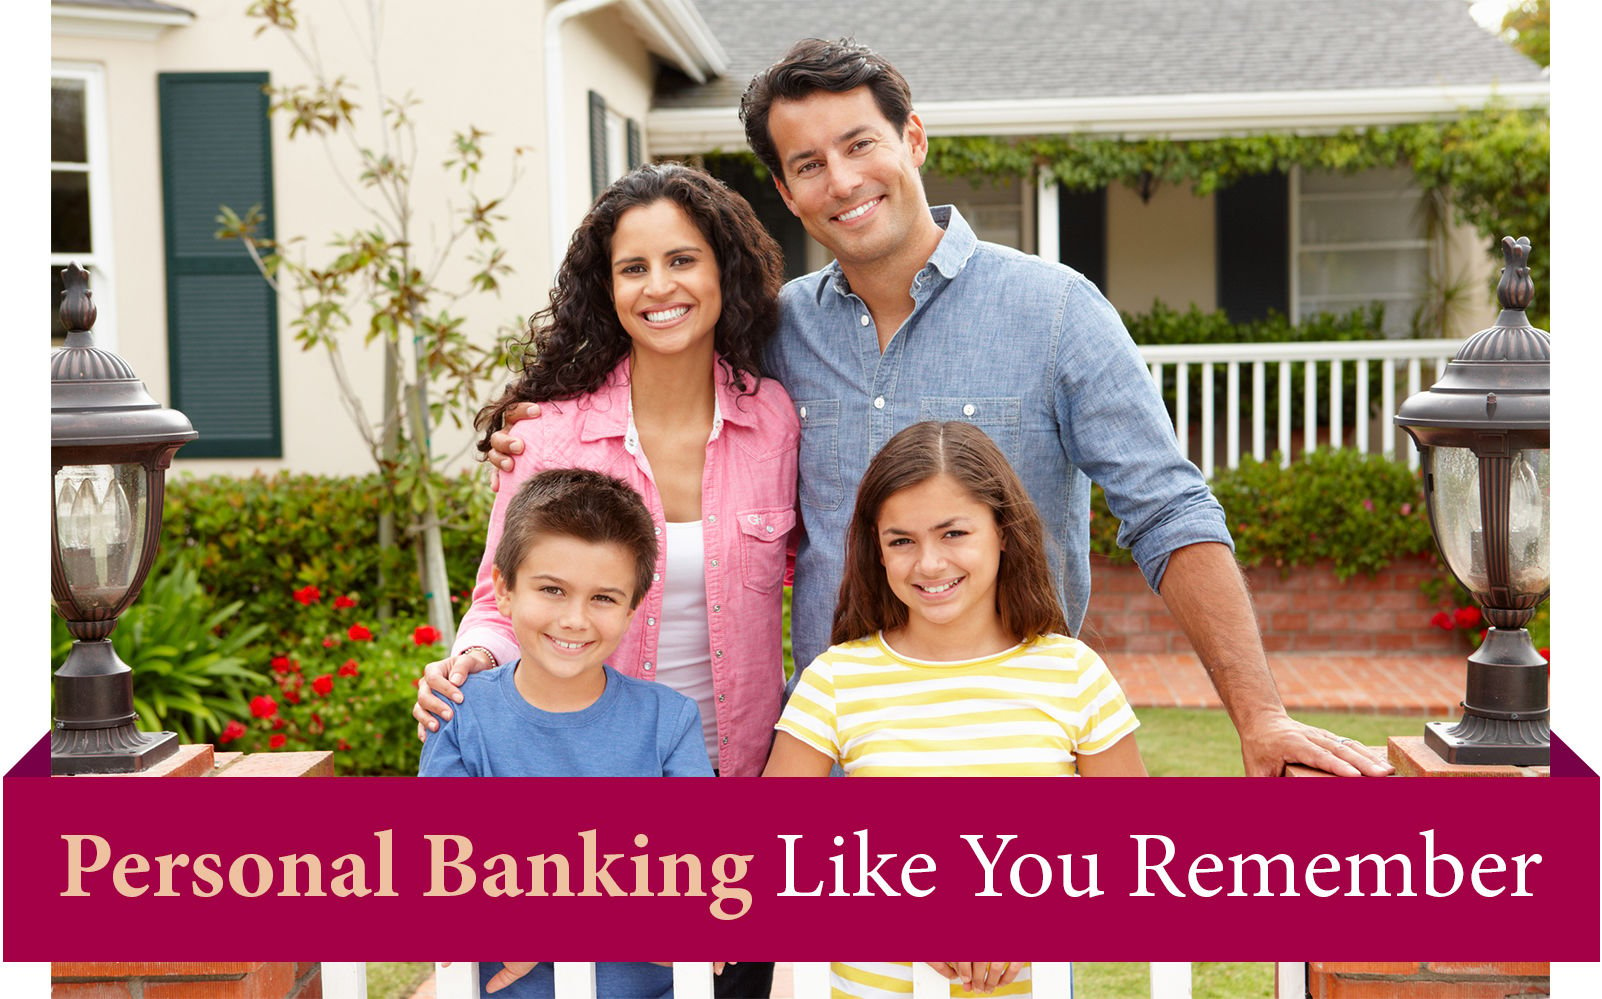 lincoln federal savings bank mortgage rates